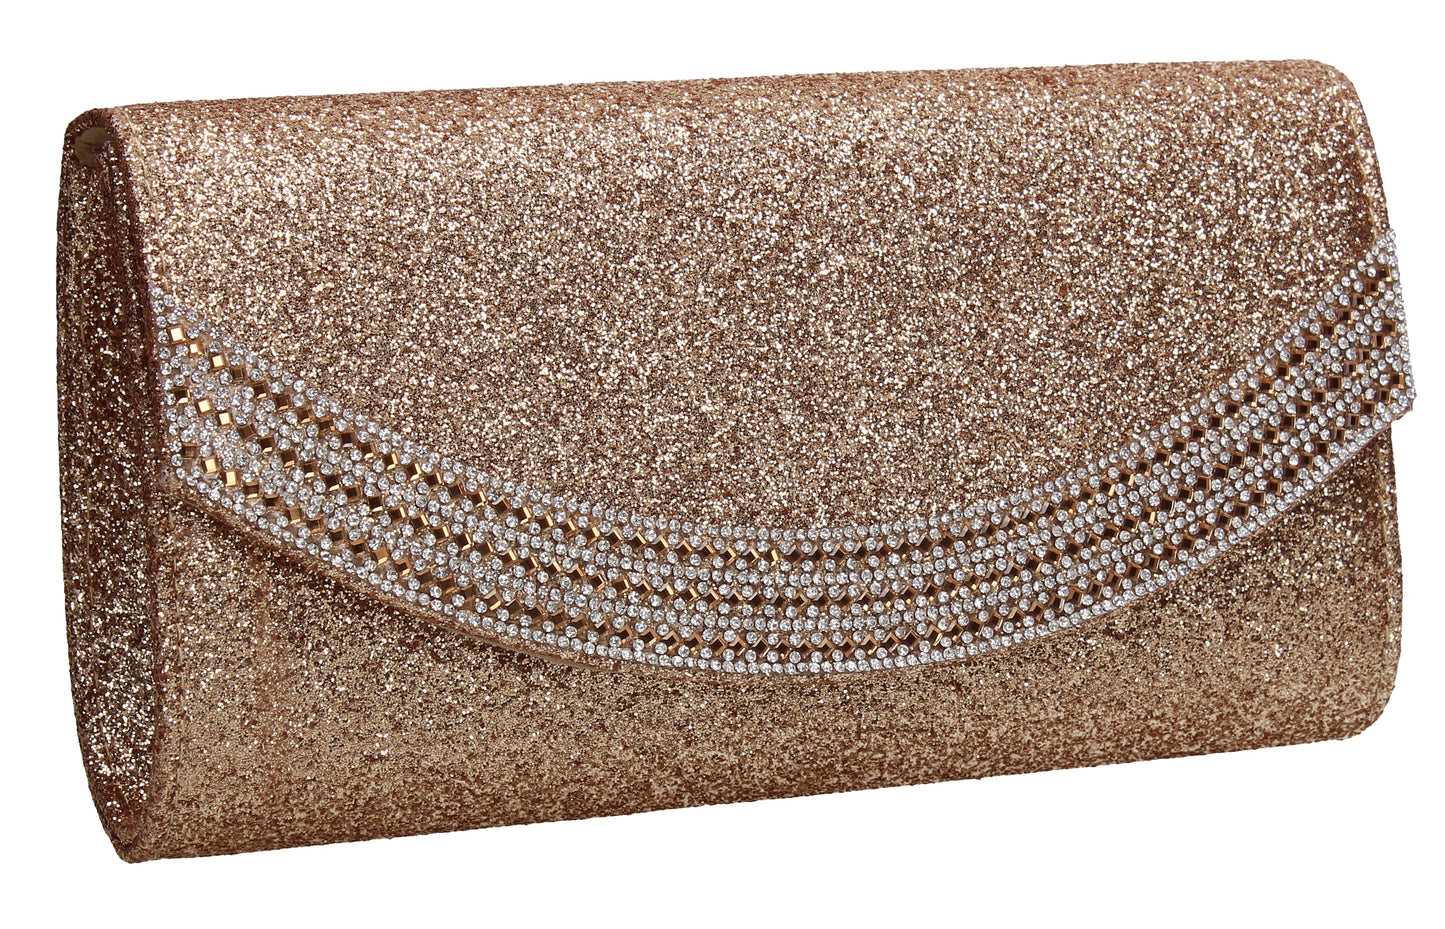 SWANKYSWANS Dakota Clutch Bag Gold Cute Cheap Clutch Bag For Weddings School and Work